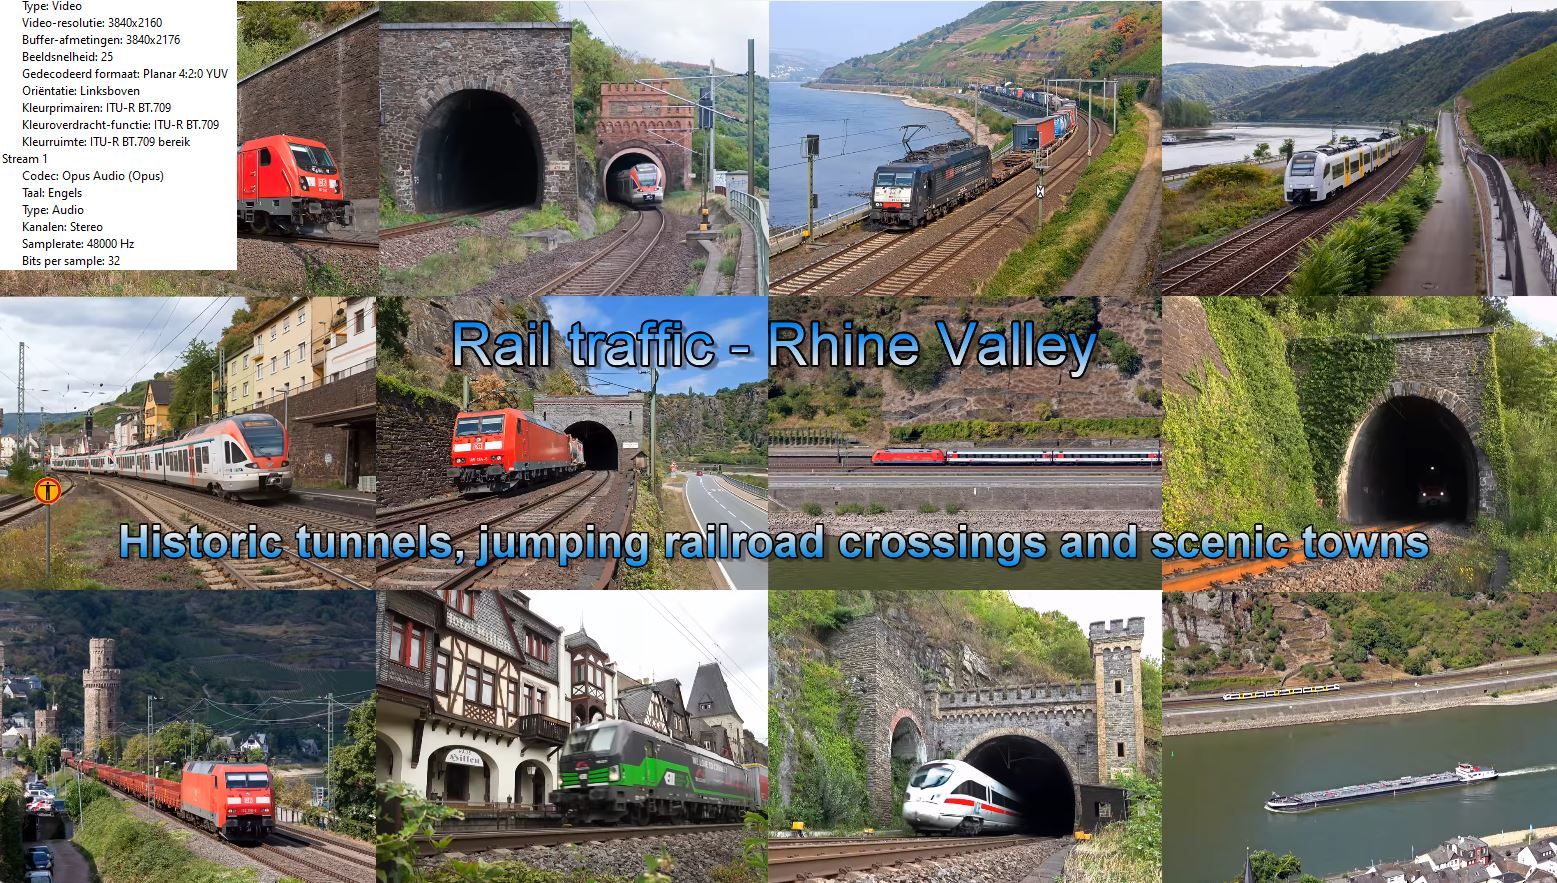 Rhine Valley - rail traffic - Historic rail tunnels, jumping railroad crossings, scenic towns 4K